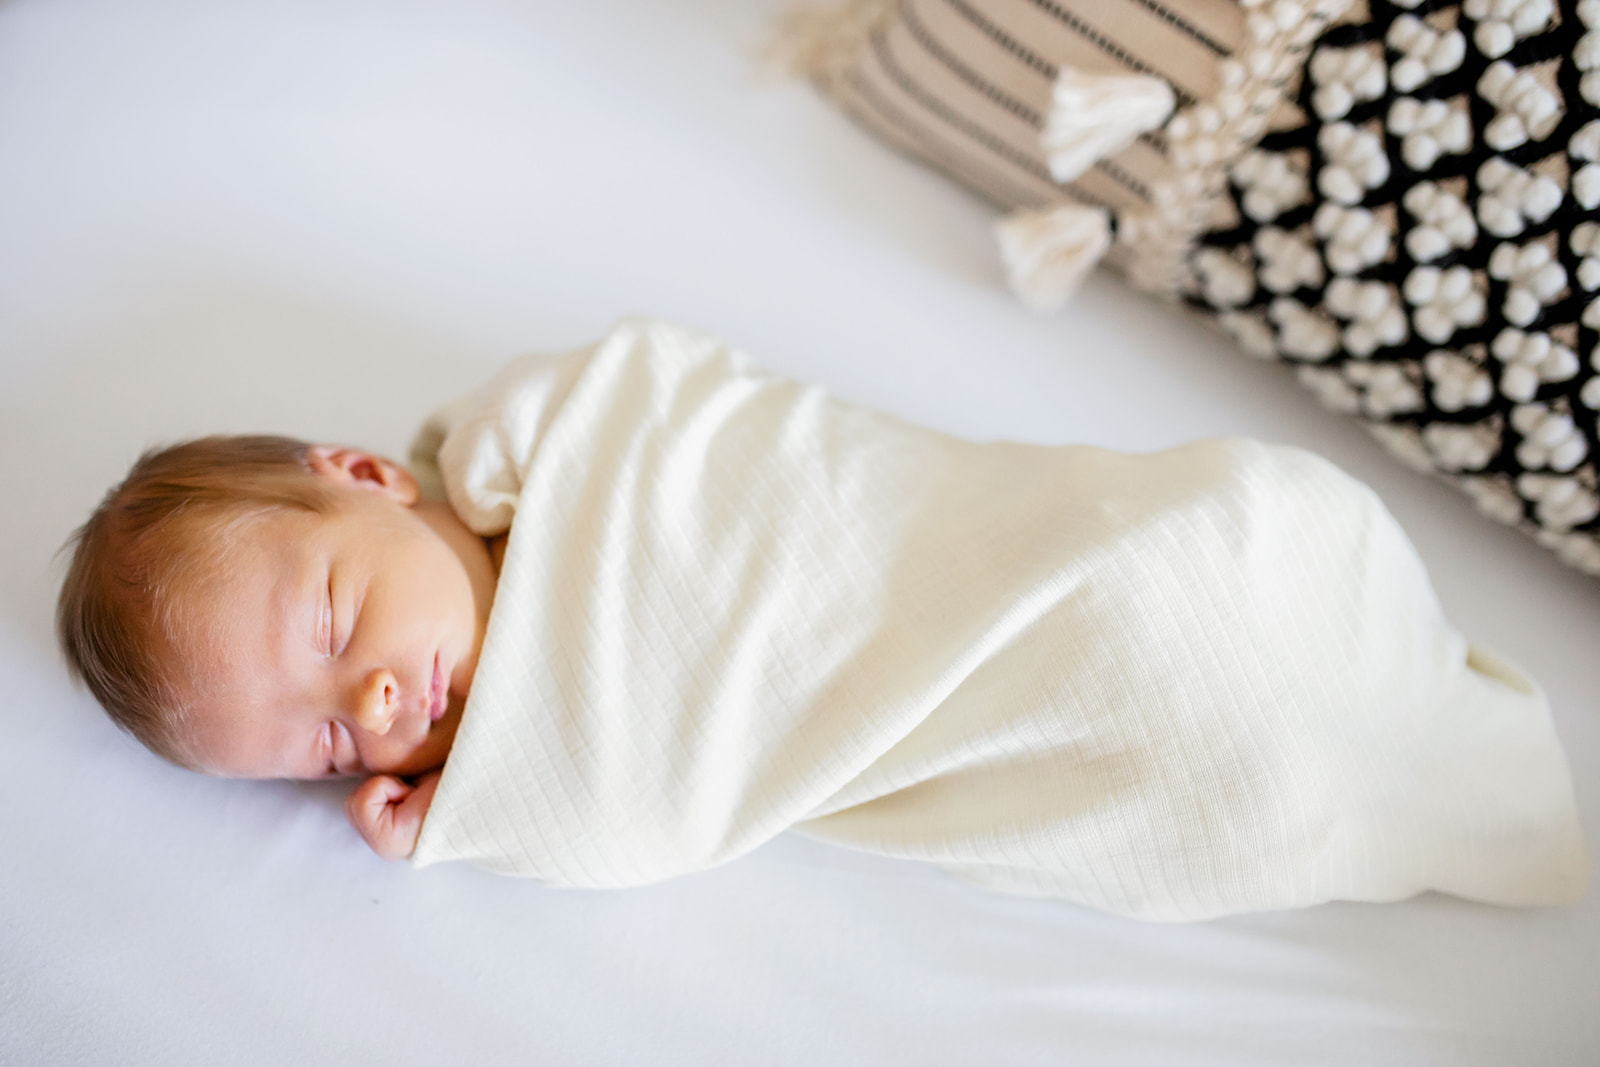 Baby Turners Lifestyle Newborn Shoot - Image Property of www.j-dphoto.com